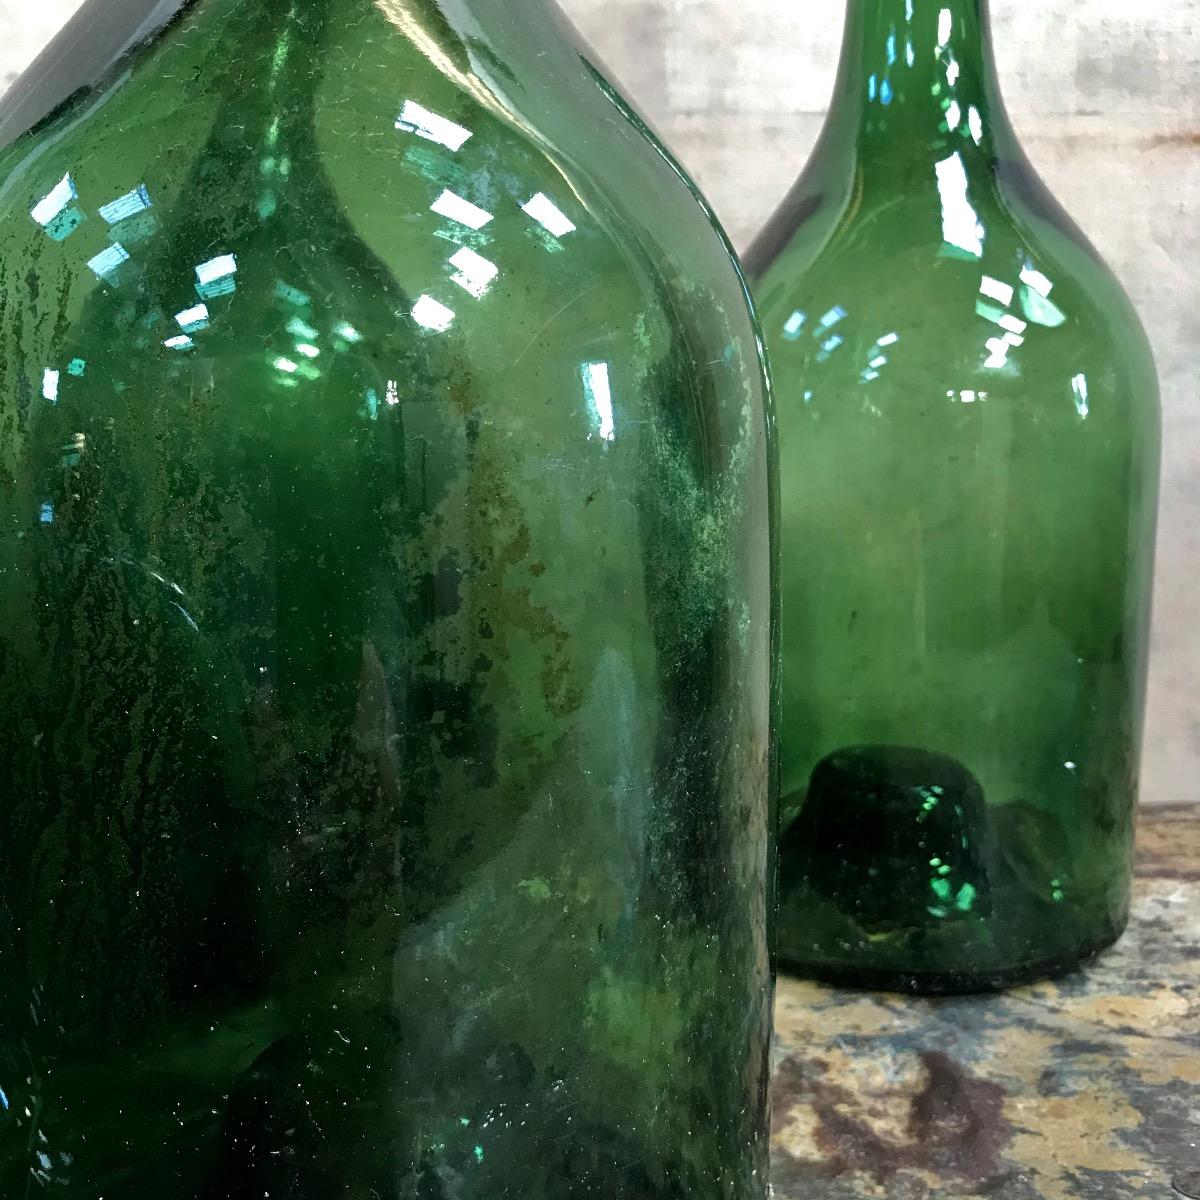 https://www.ericbienaime.com/galleries/large-green-glass-bottles-4450538-en-max.jpg